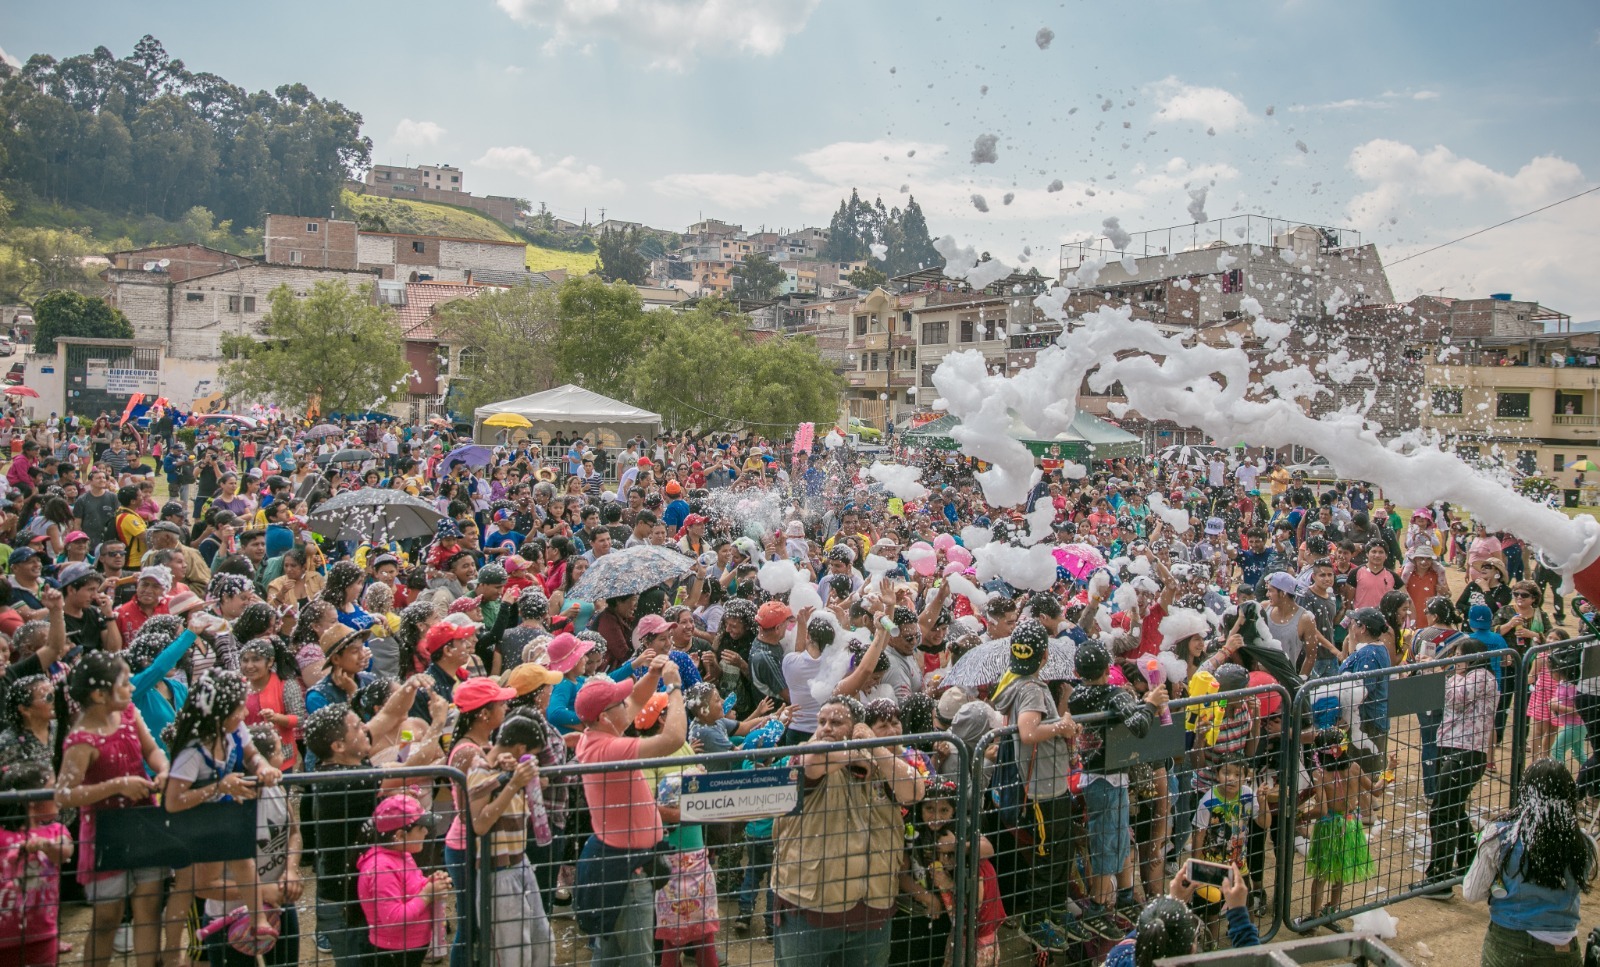 Parroquias de Loja listas con programa festivo de carnaval